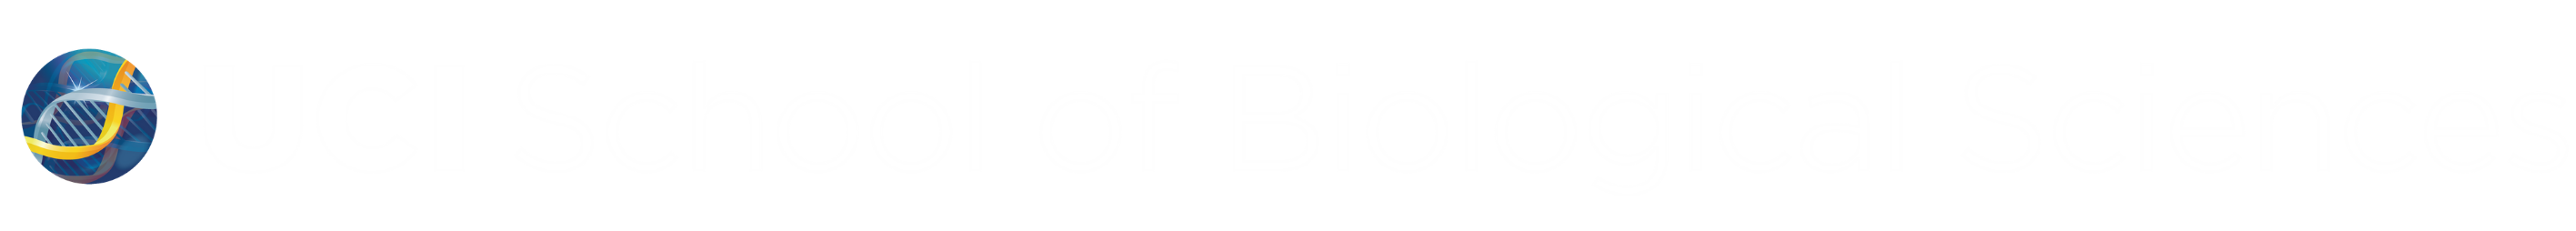 uci biosci academic logo WHITE